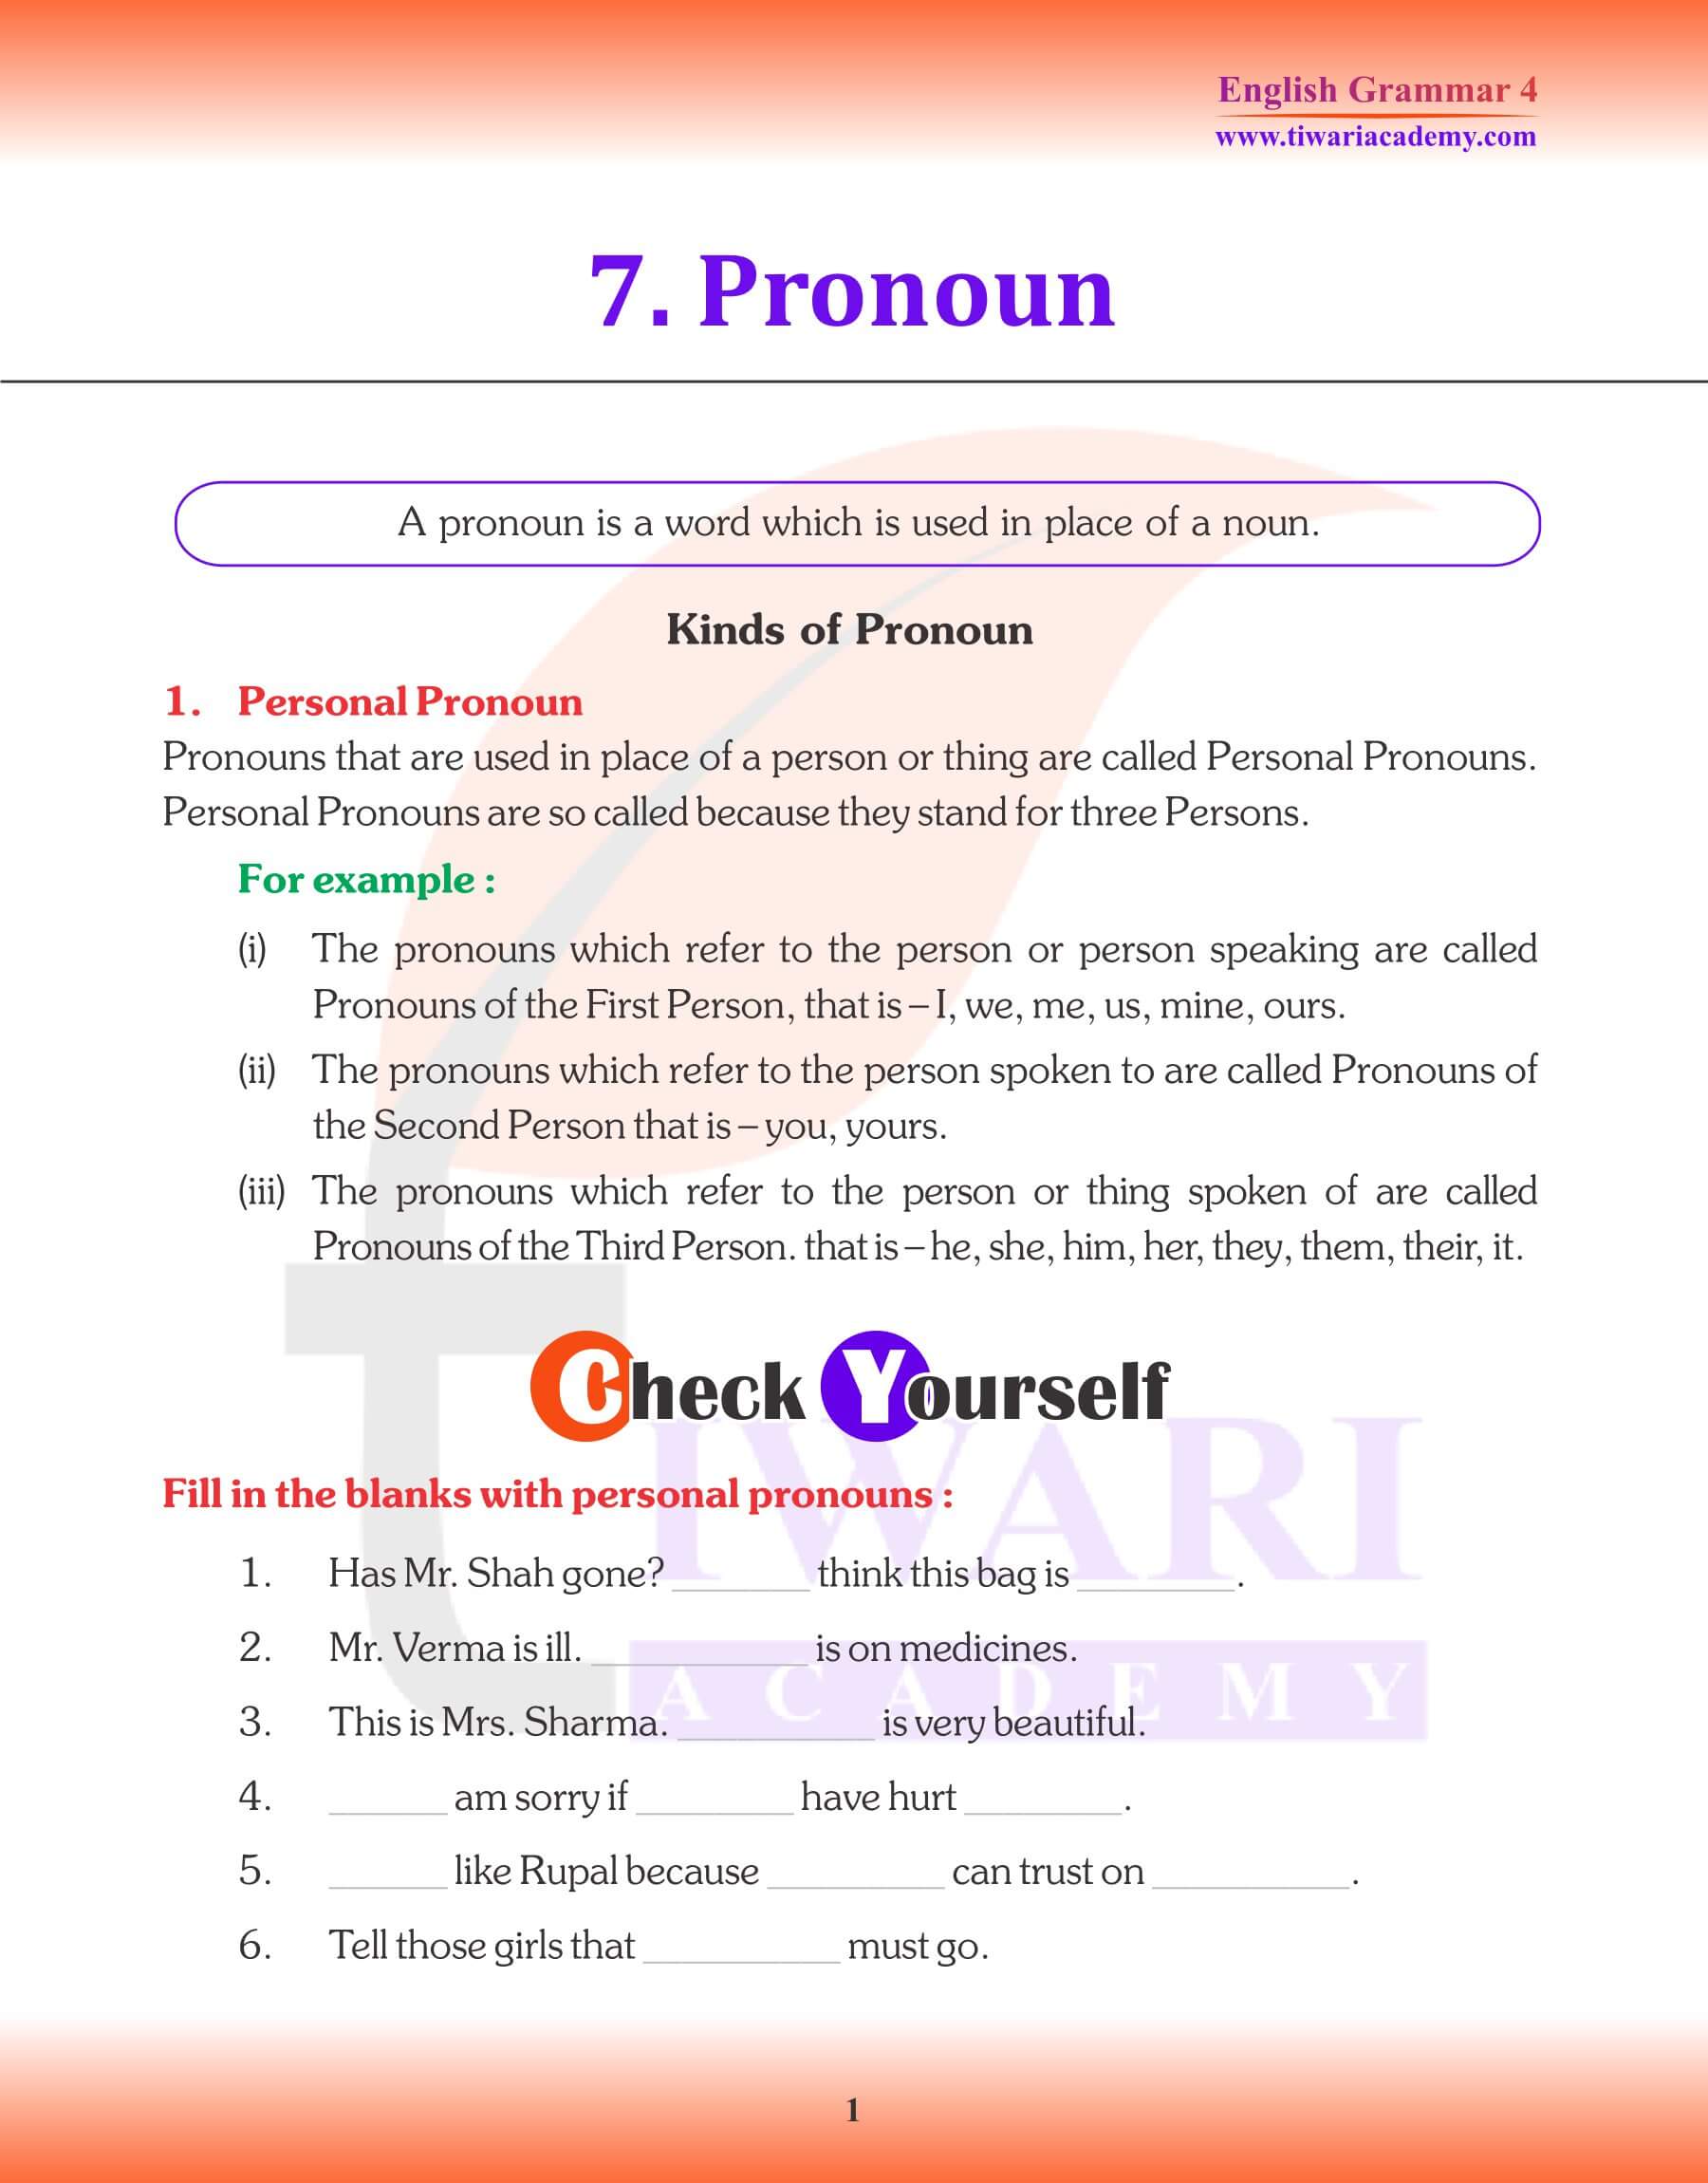 Class 4 English Grammar Personal Pronoun Revision